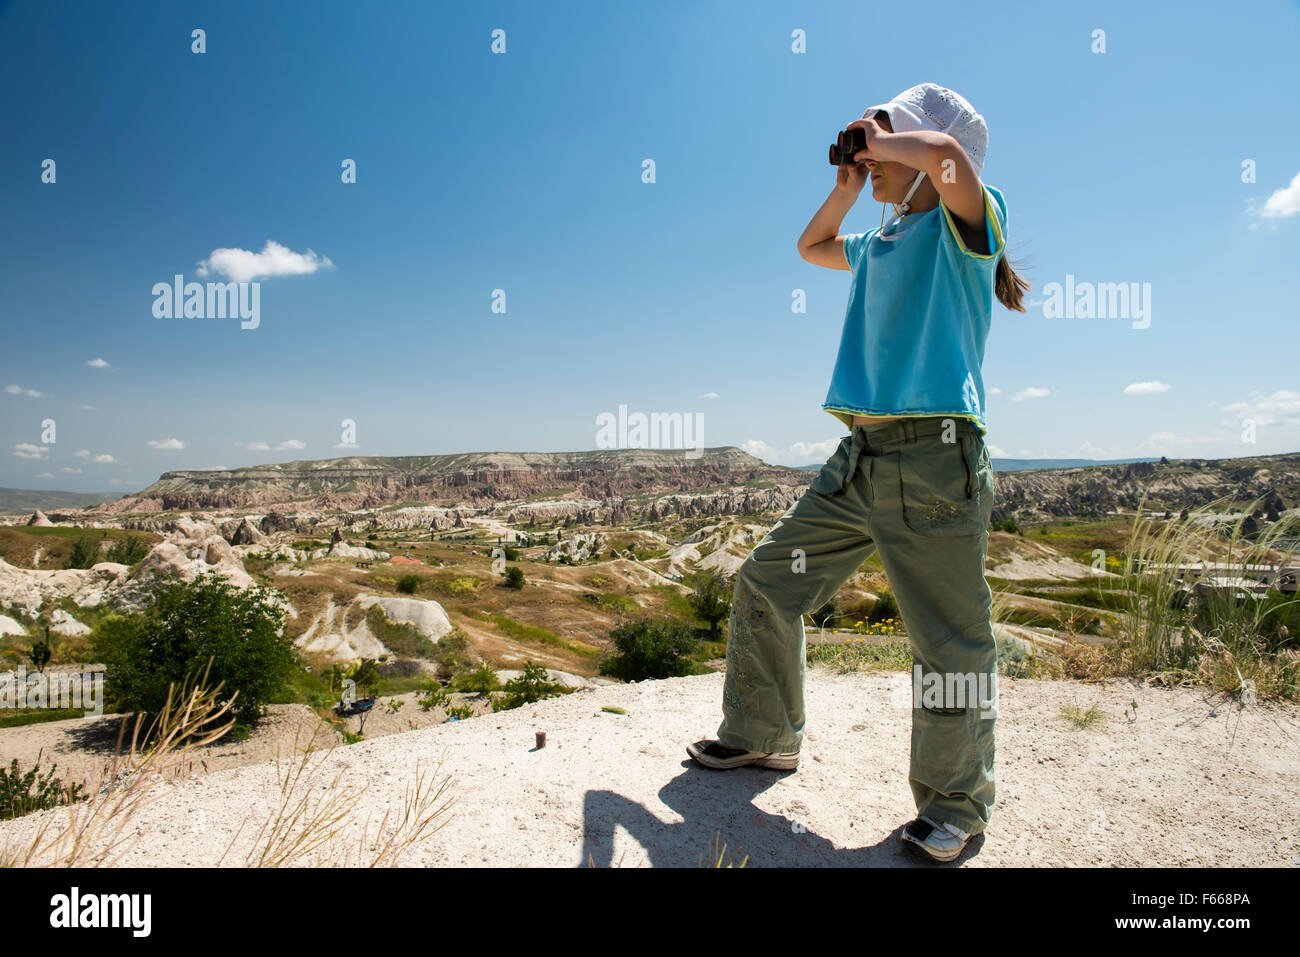 Small girl with binocular in mountains Stock Photo